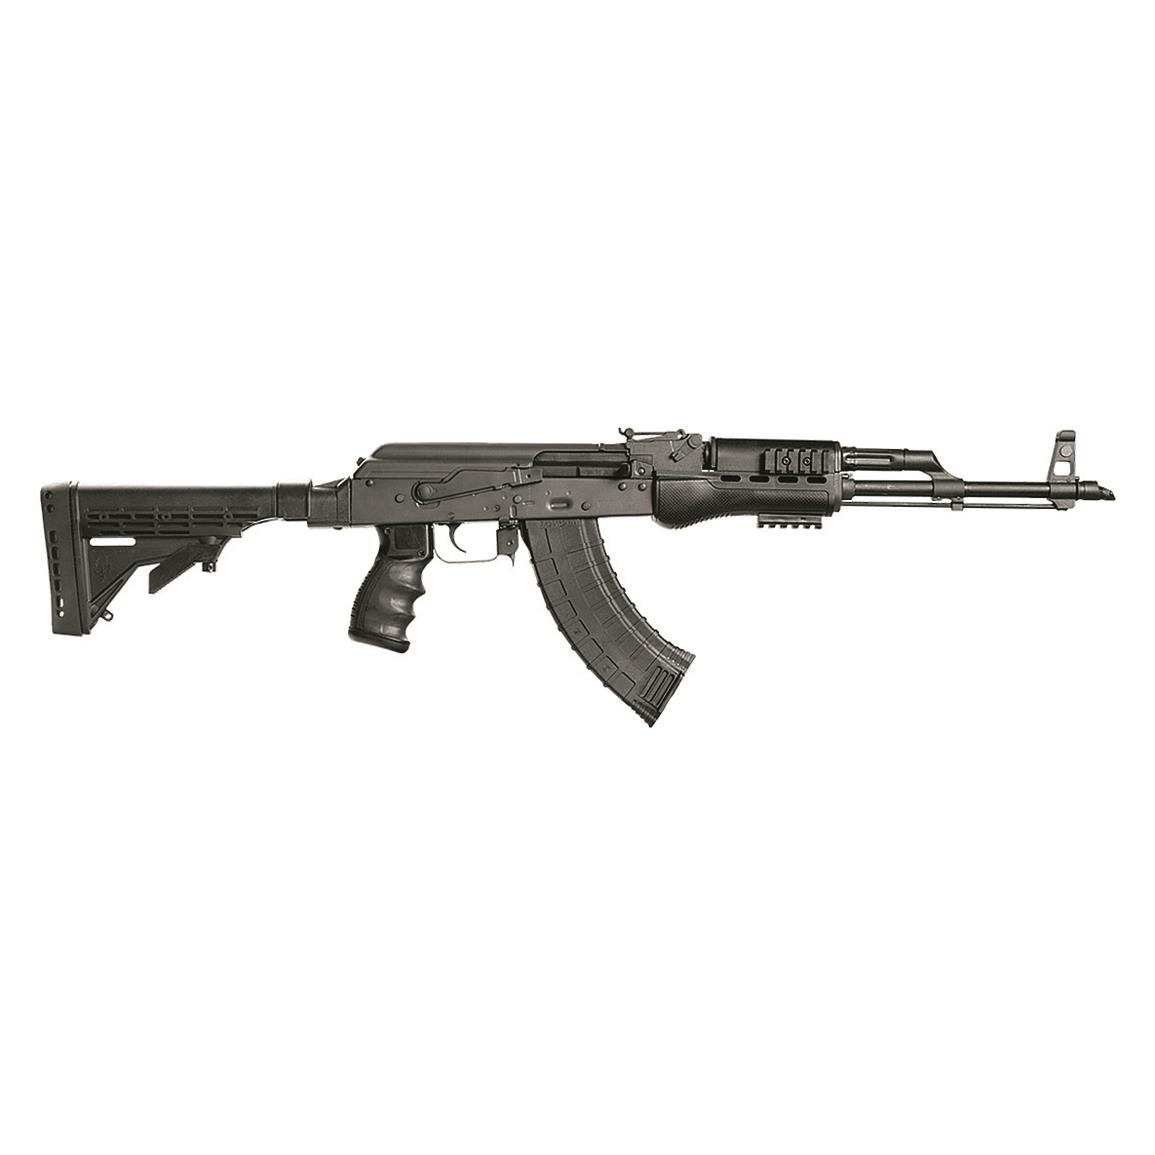 Blackheart Model B10A AK-47, Semi-Automatic, 7.62x39mm, 16.25" Barrel, 30+1 Rounds